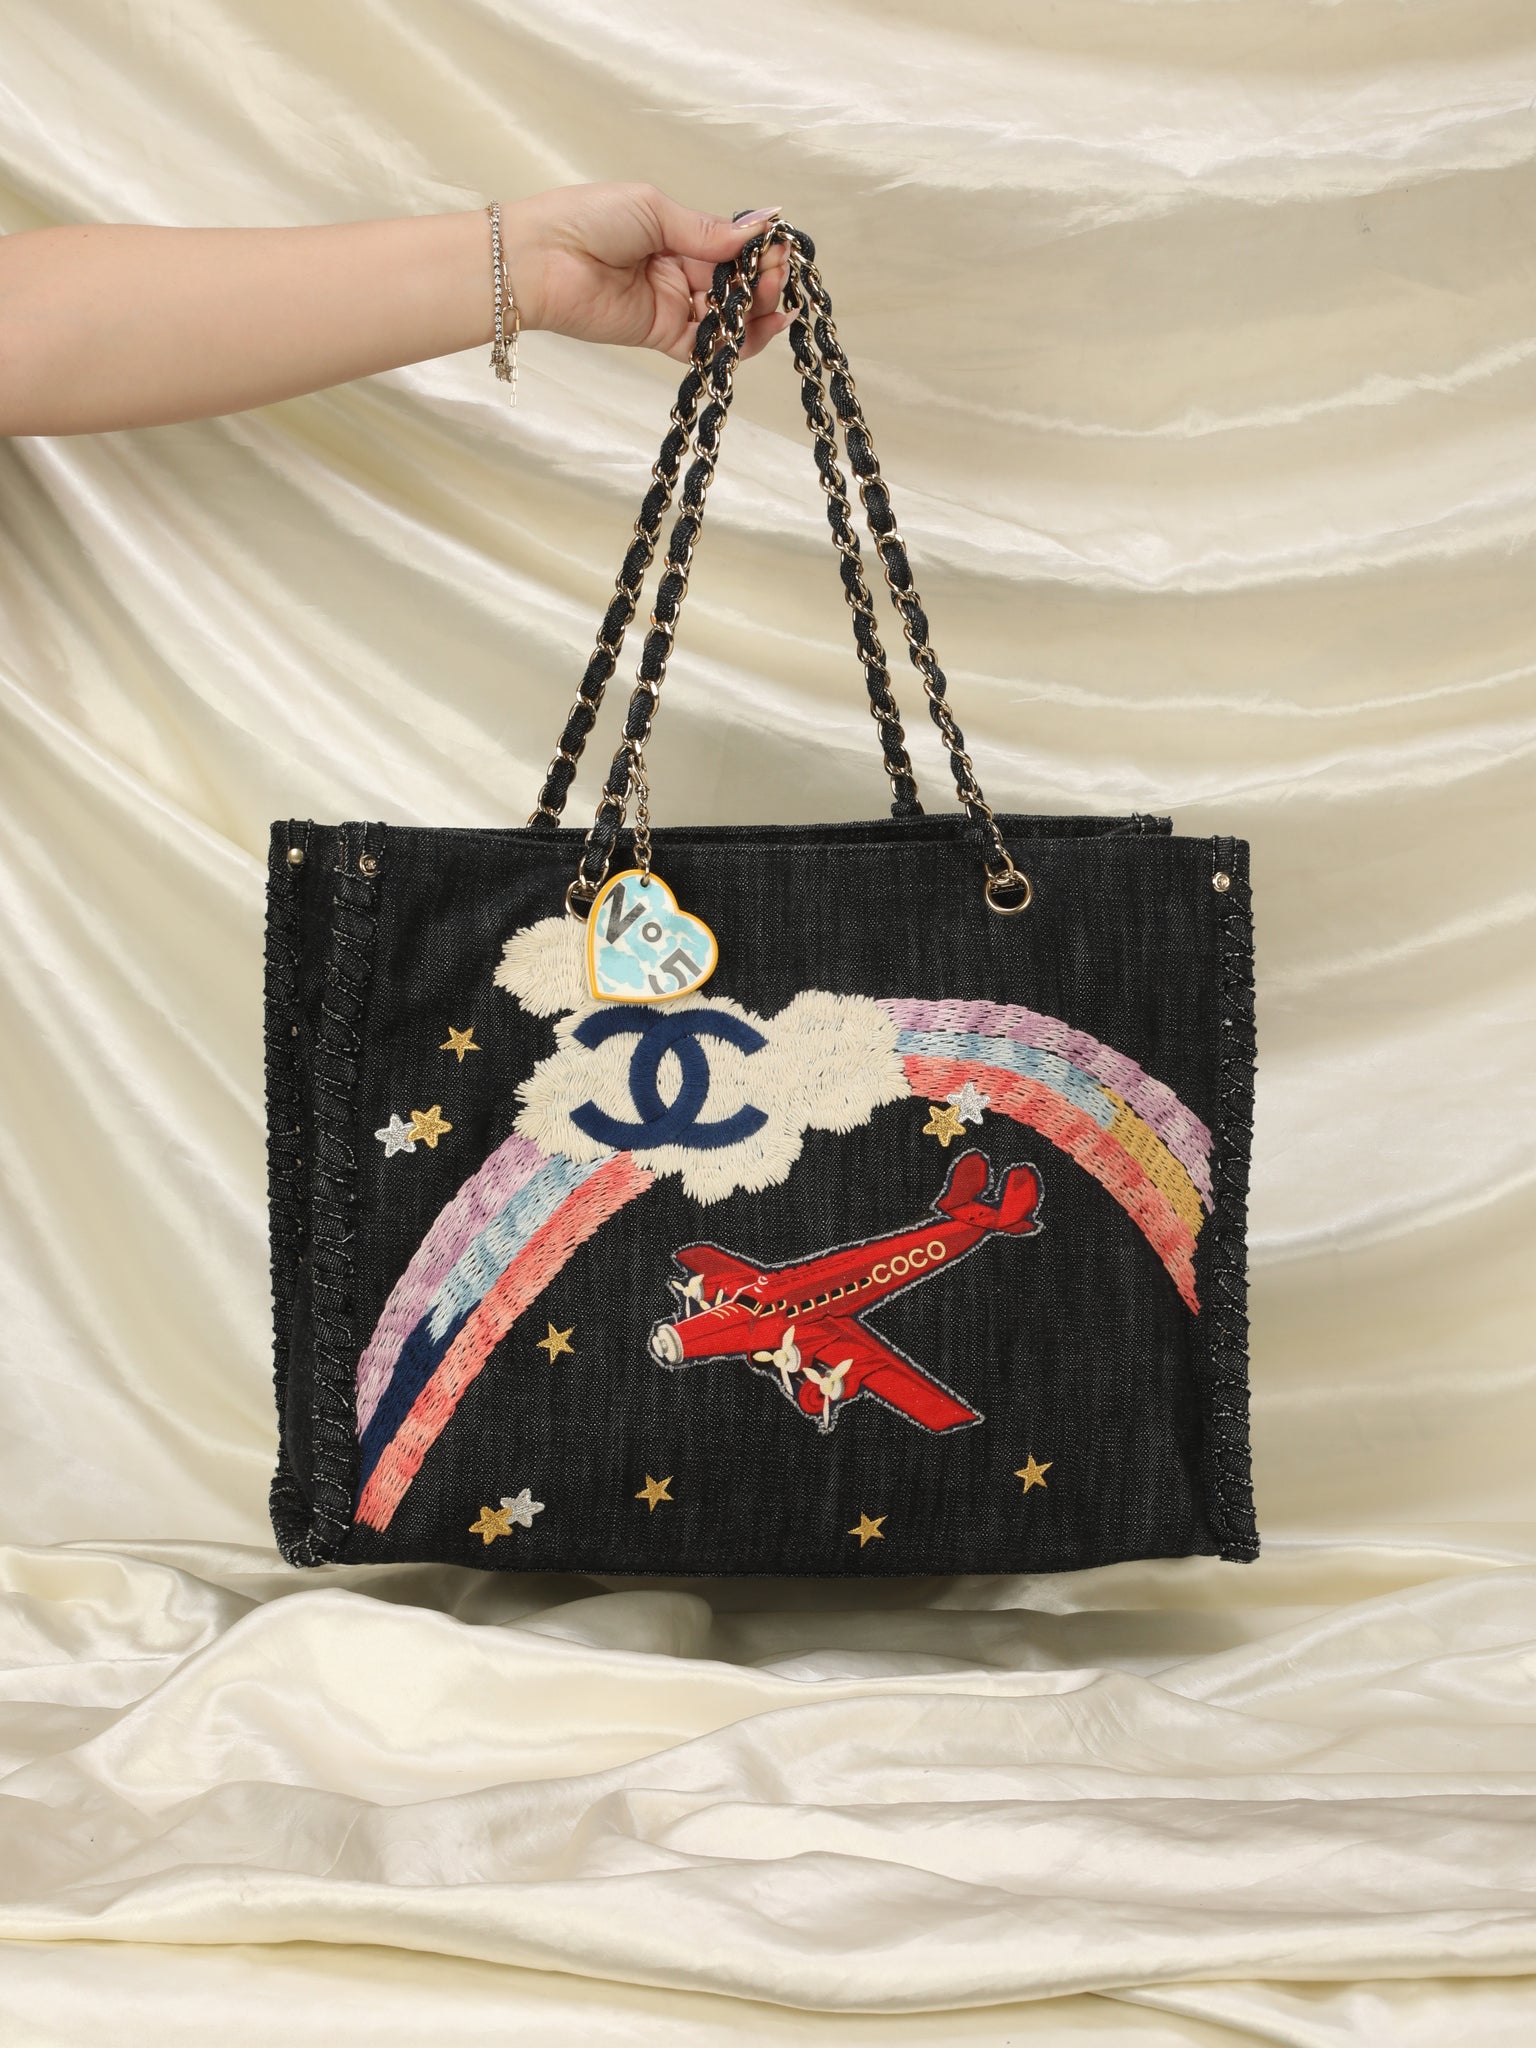 Chanel Style Tweed Embellished Flap Bag Keychain/Bag Charm